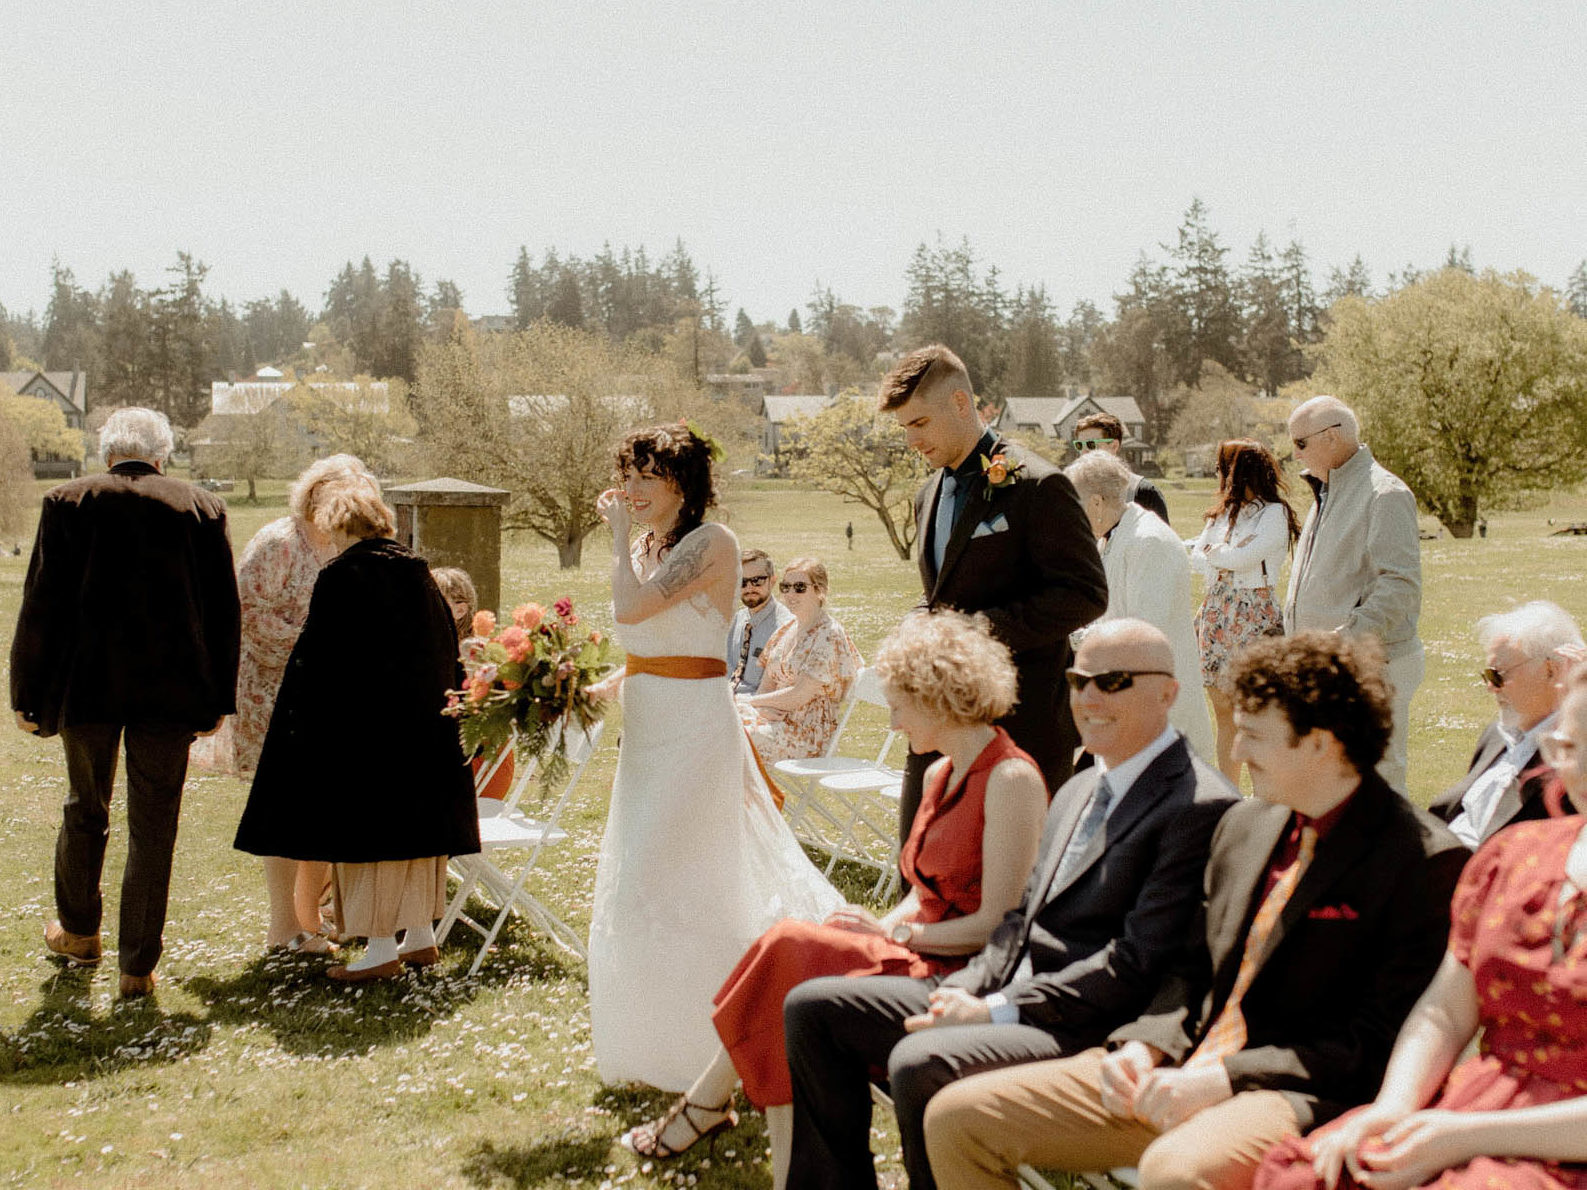 Simple Port Townsend elopement ceremony